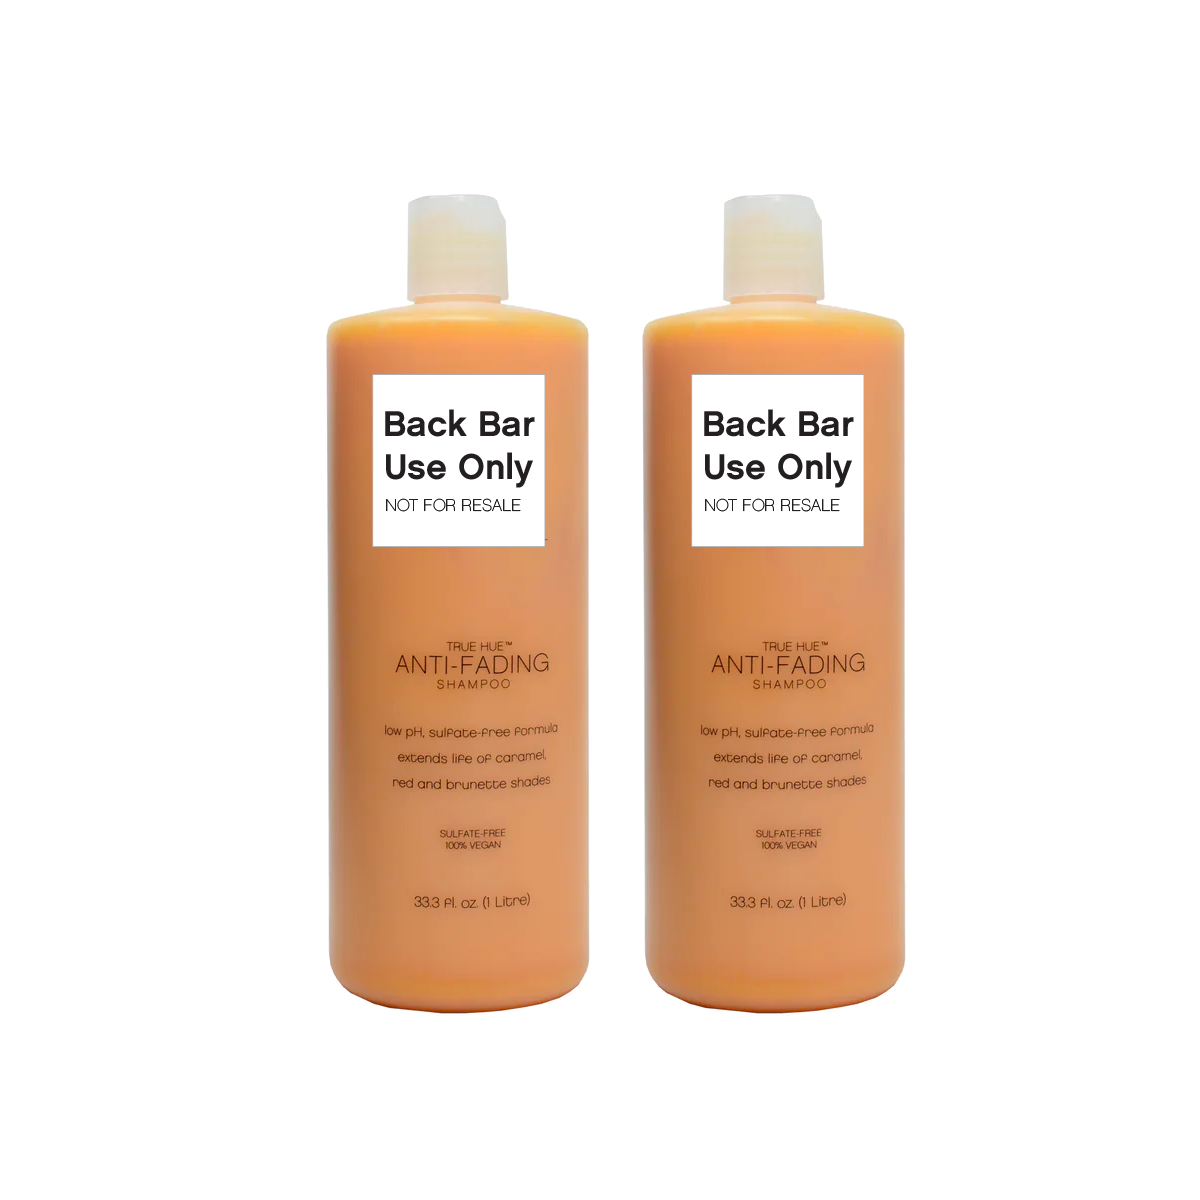 True Hue Anti-Fading Shampoo Back Bar: 3 x 32oz pk